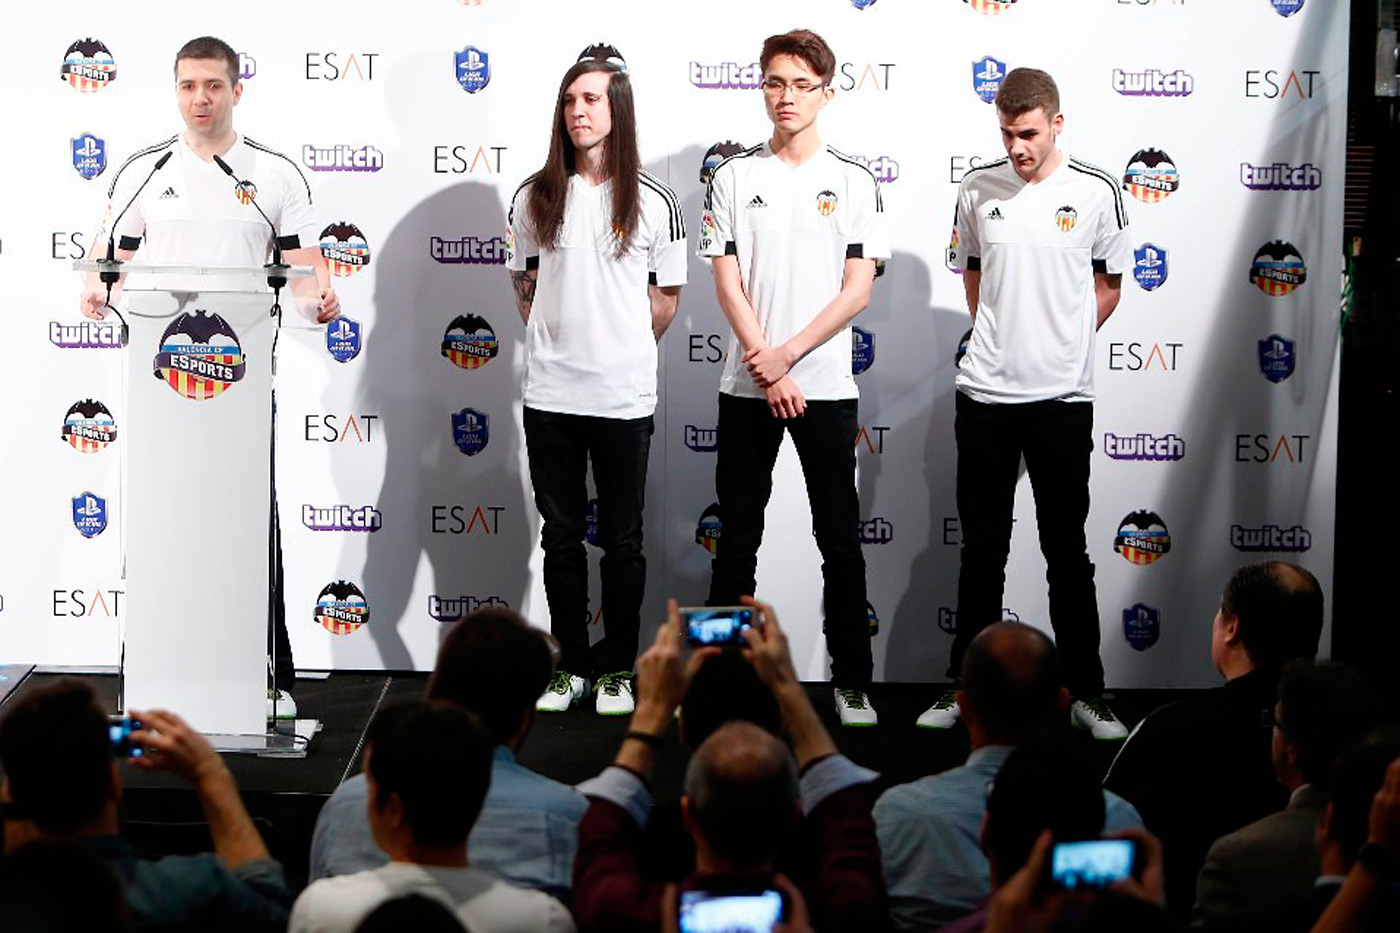 Valencia CF is the next big soccer club to start an eSports team